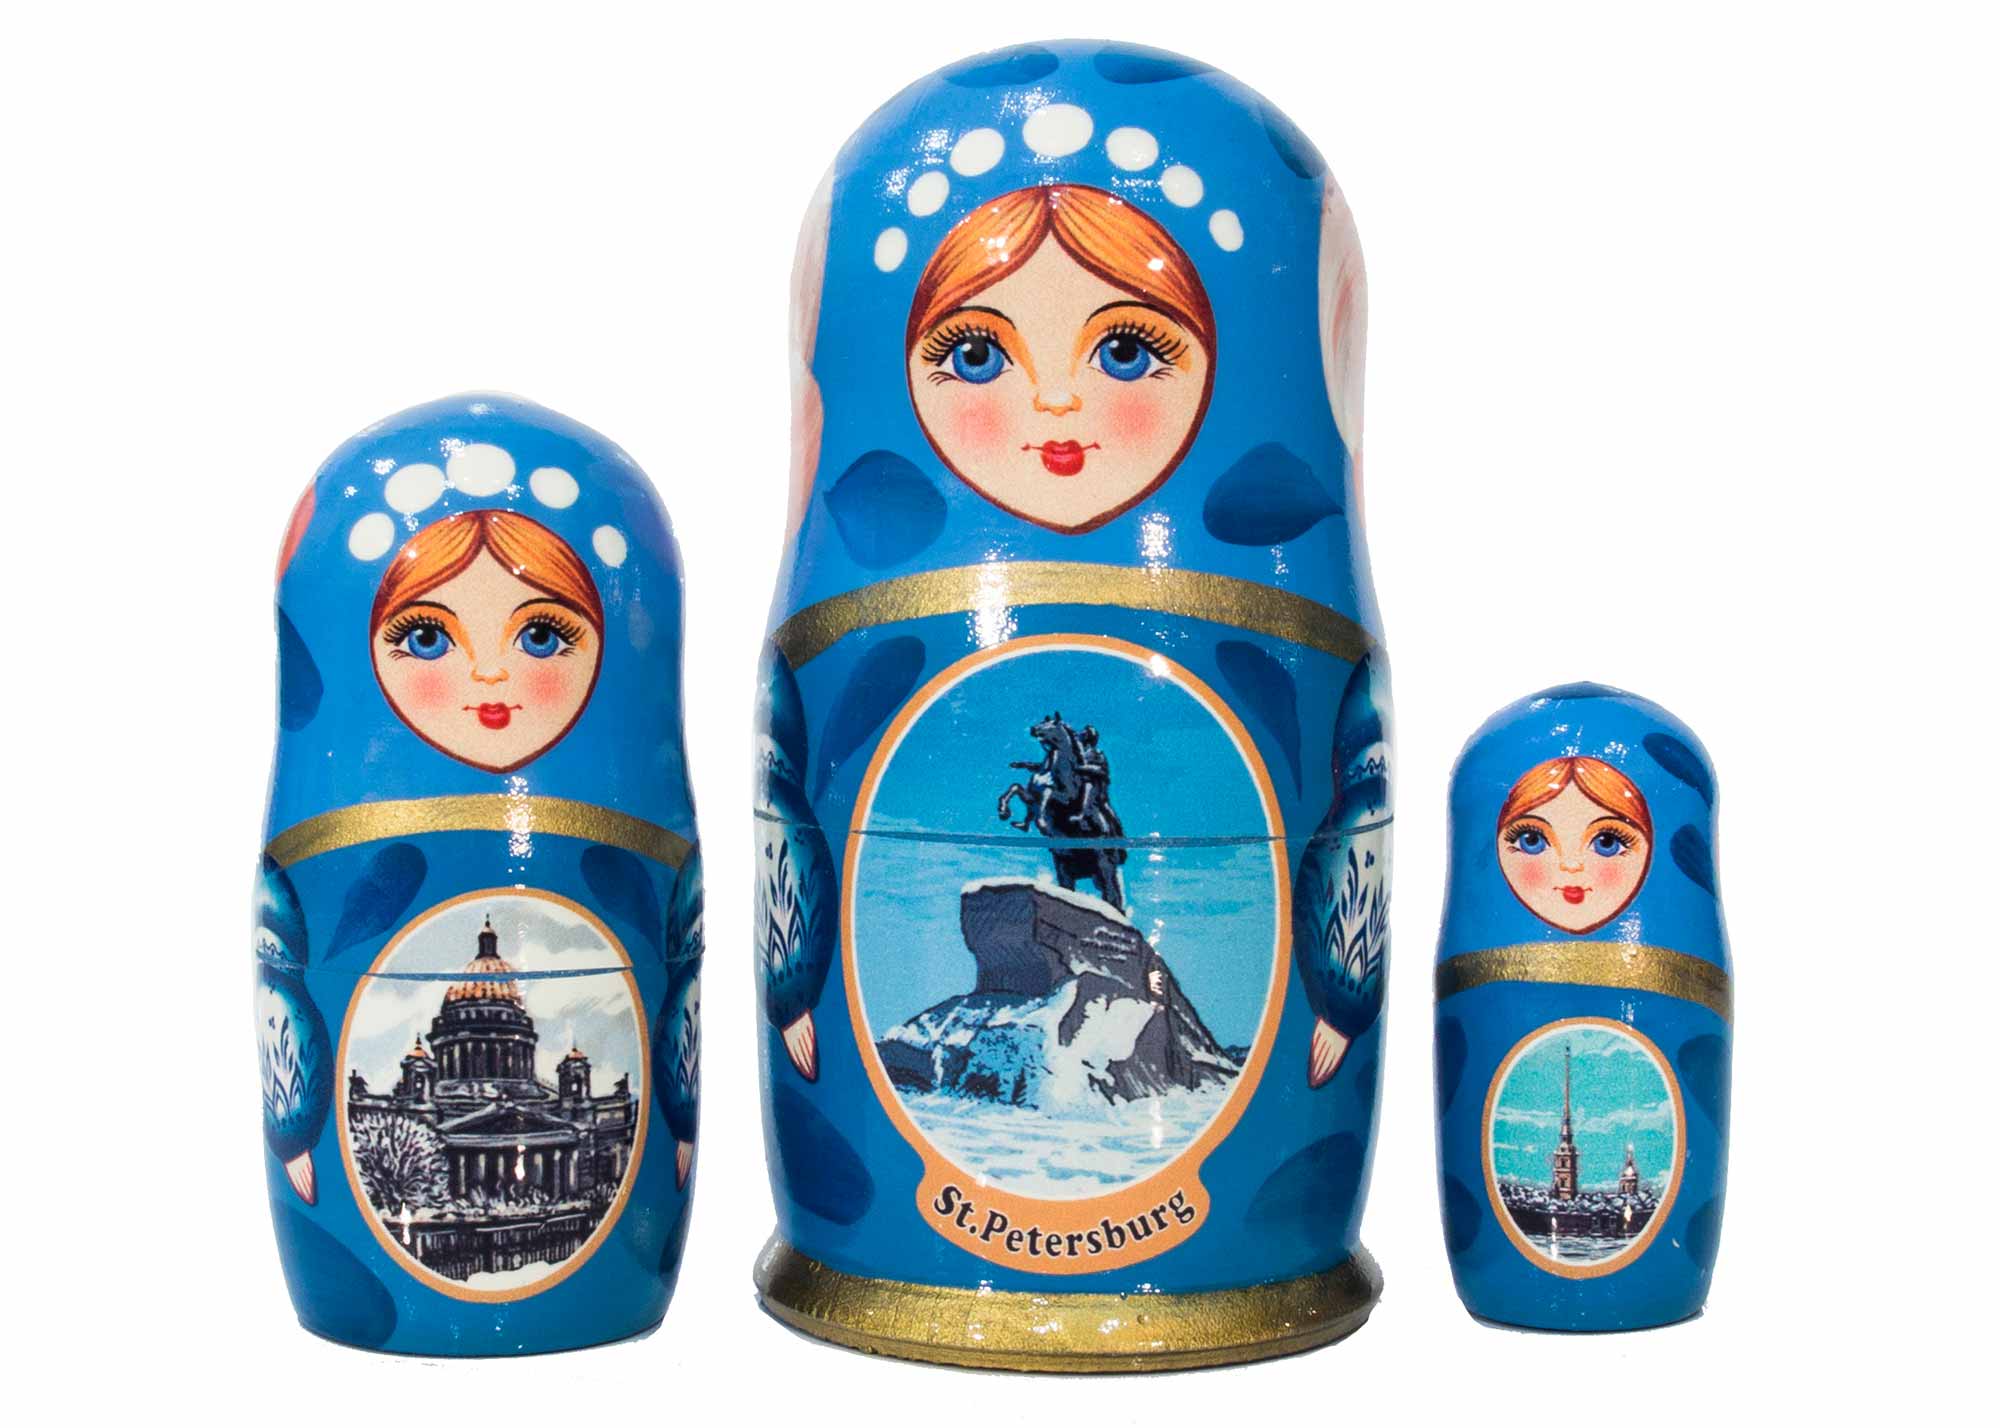 Buy Saint Petersburg Nesting Doll 3pc./4" - Blue at GoldenCockerel.com